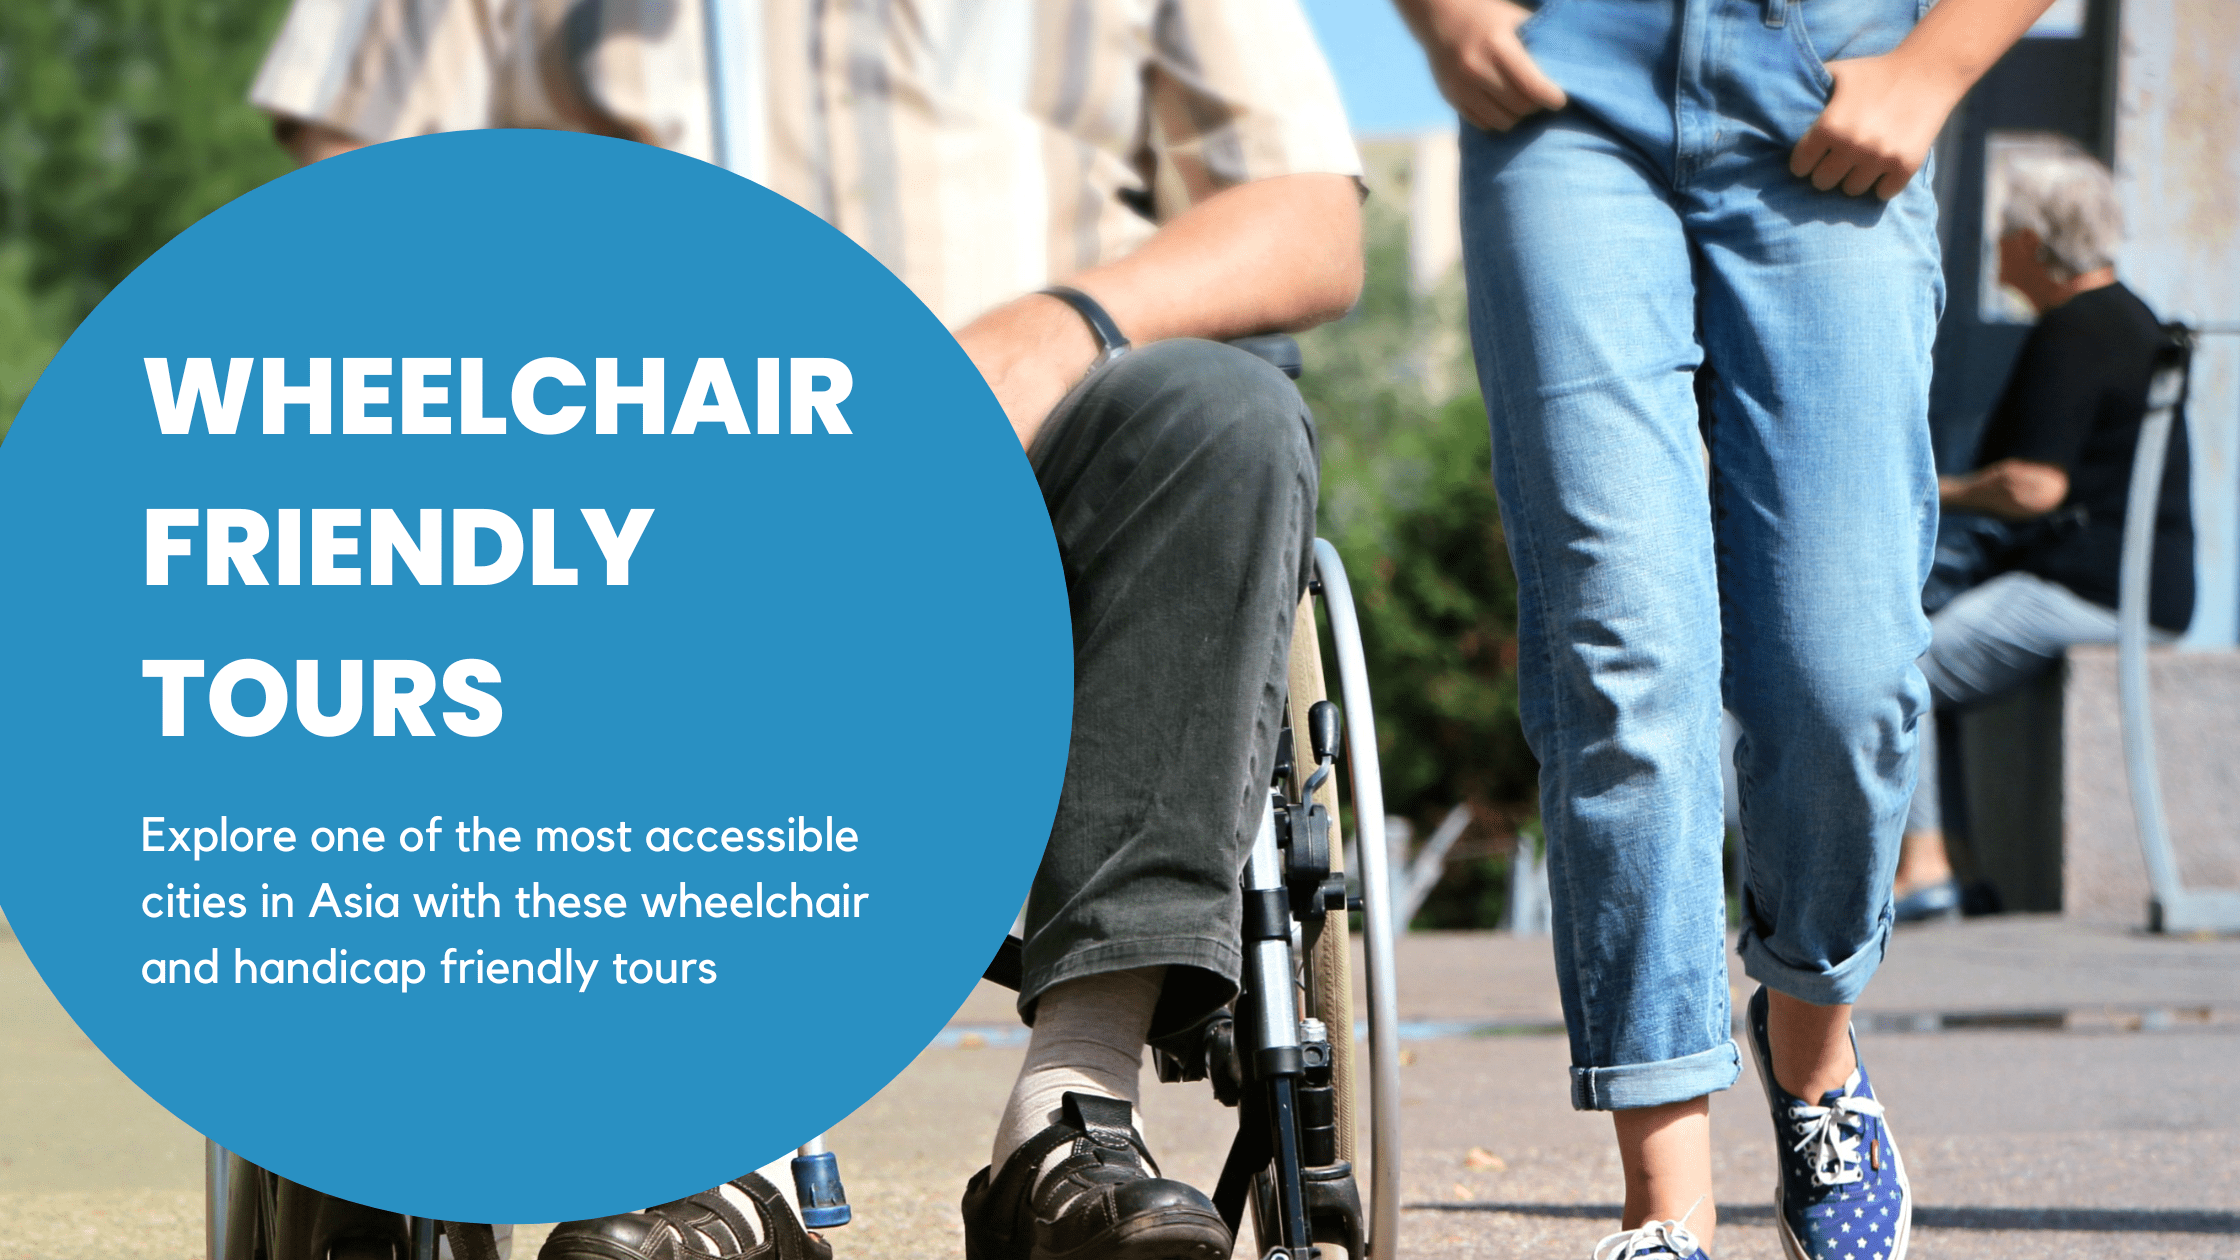 5 wheelchair friendly tours in Singapore